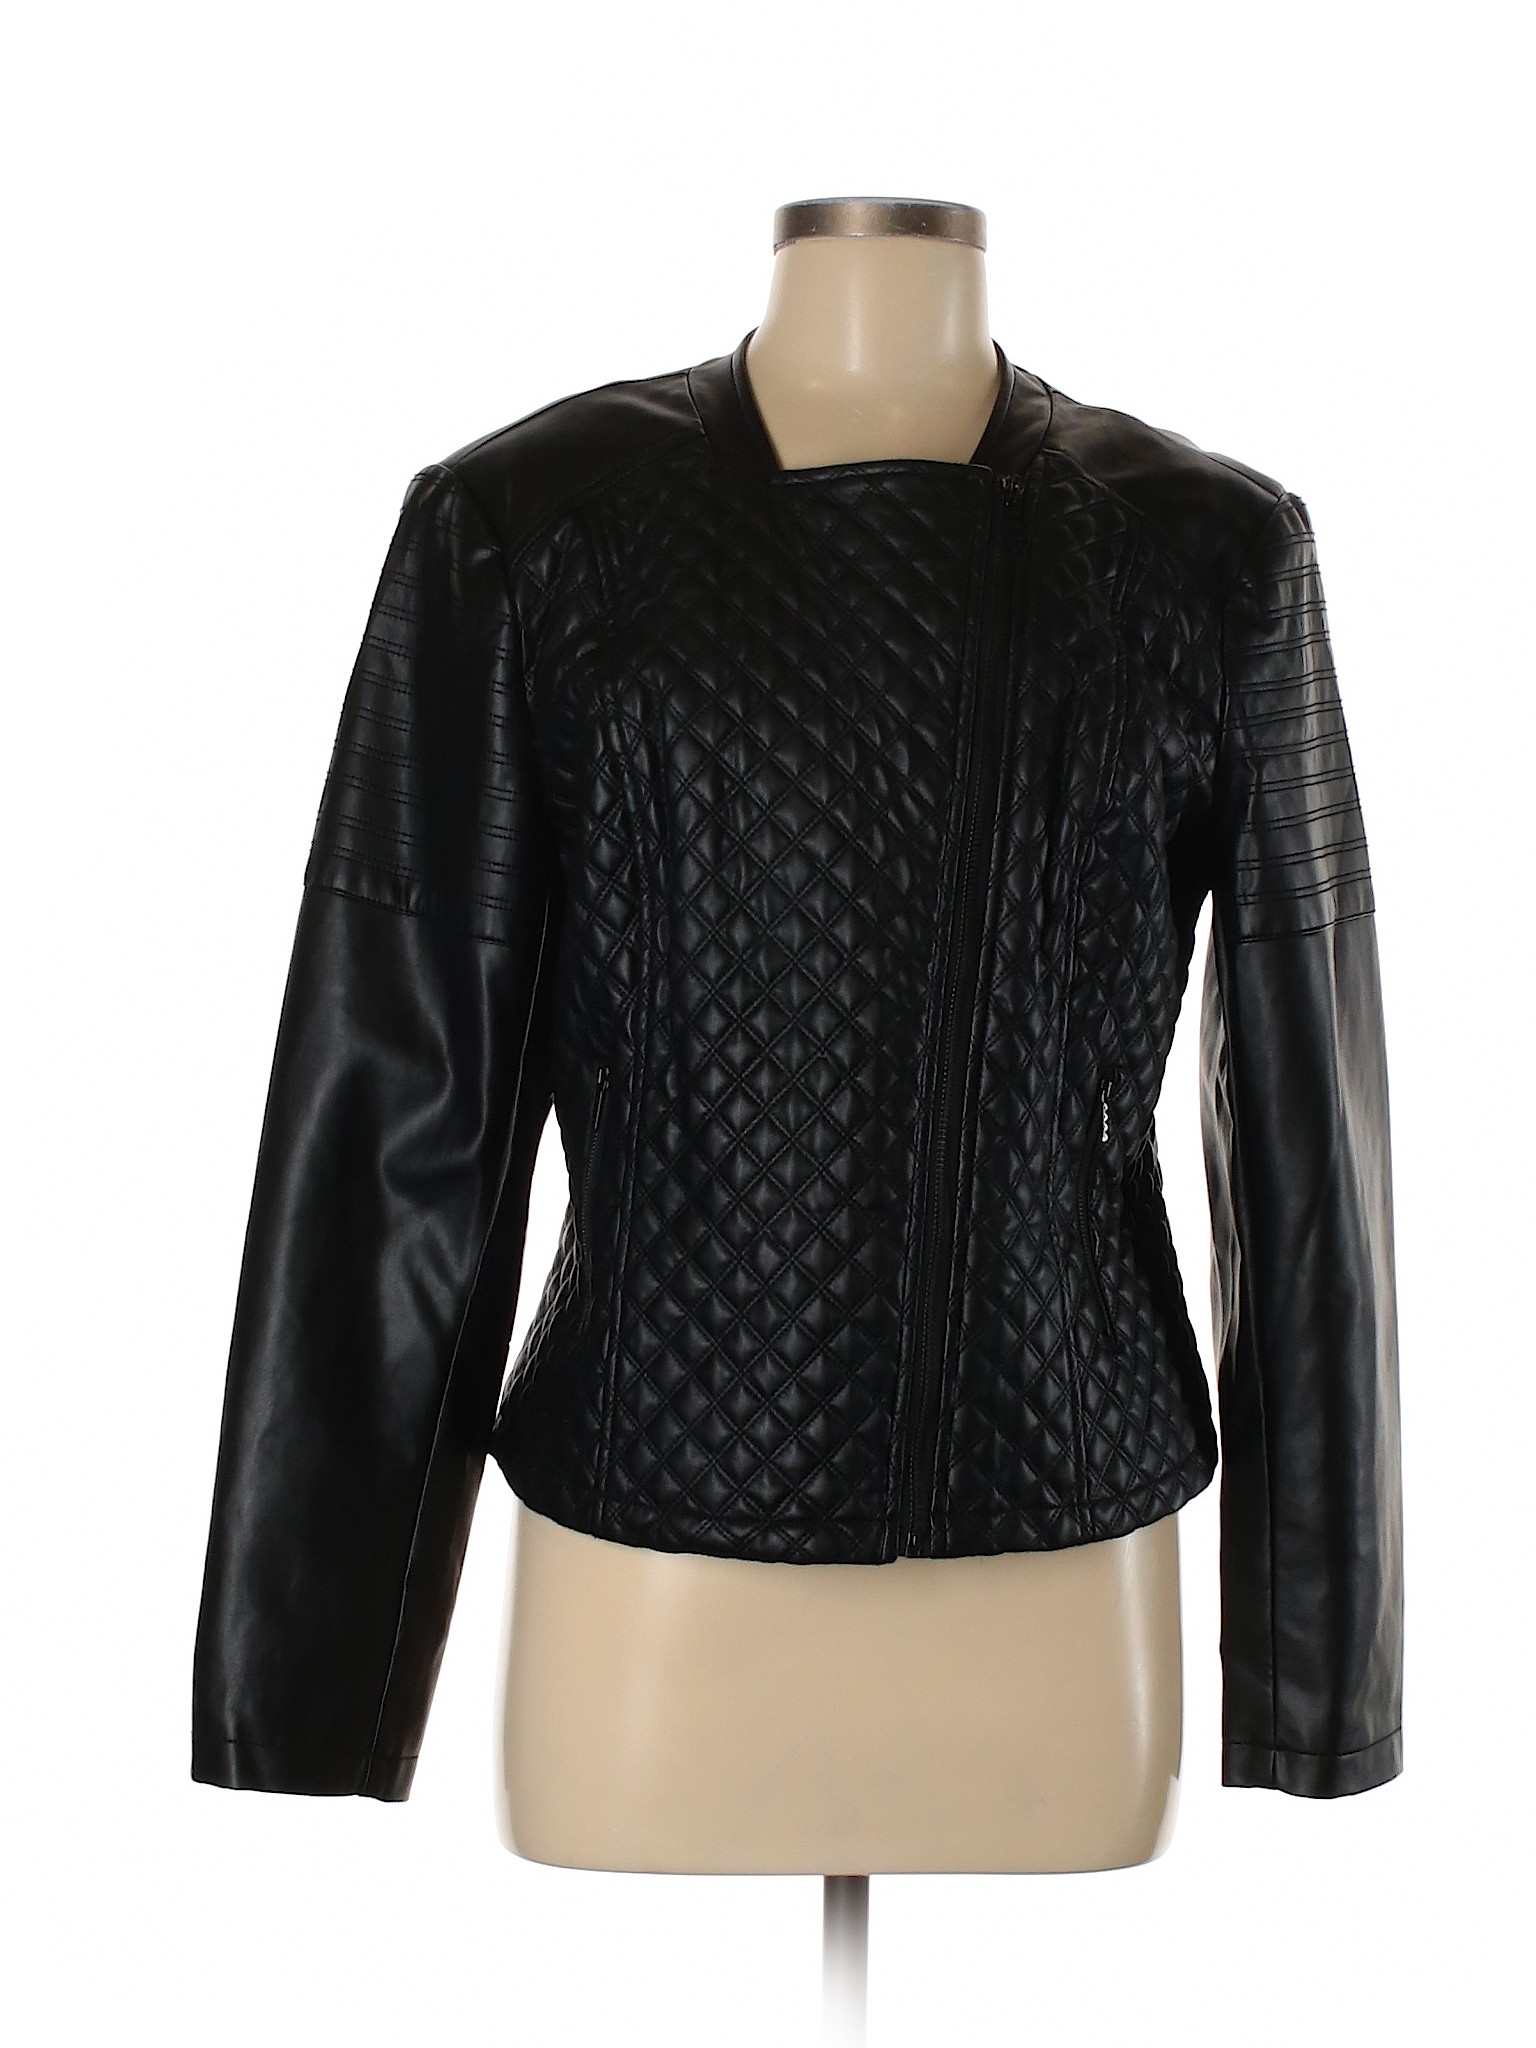 Assorted Brands Women Black Faux Leather Jacket M | eBay